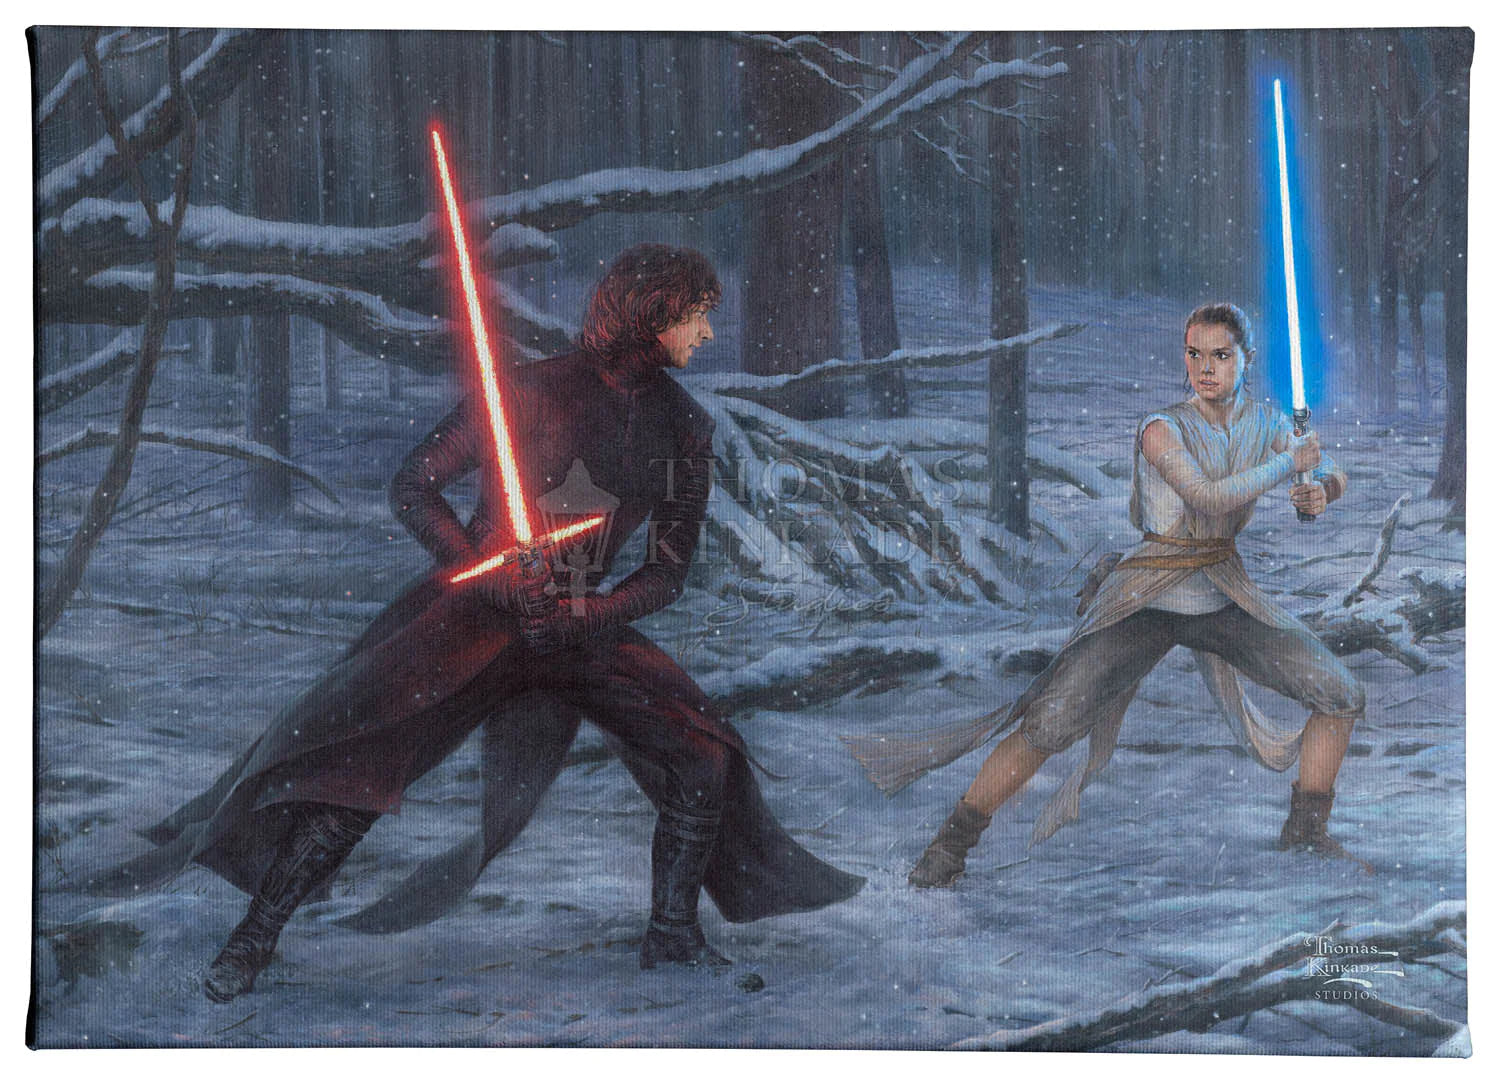 Rey and Kylo Ren's lightsaber duel